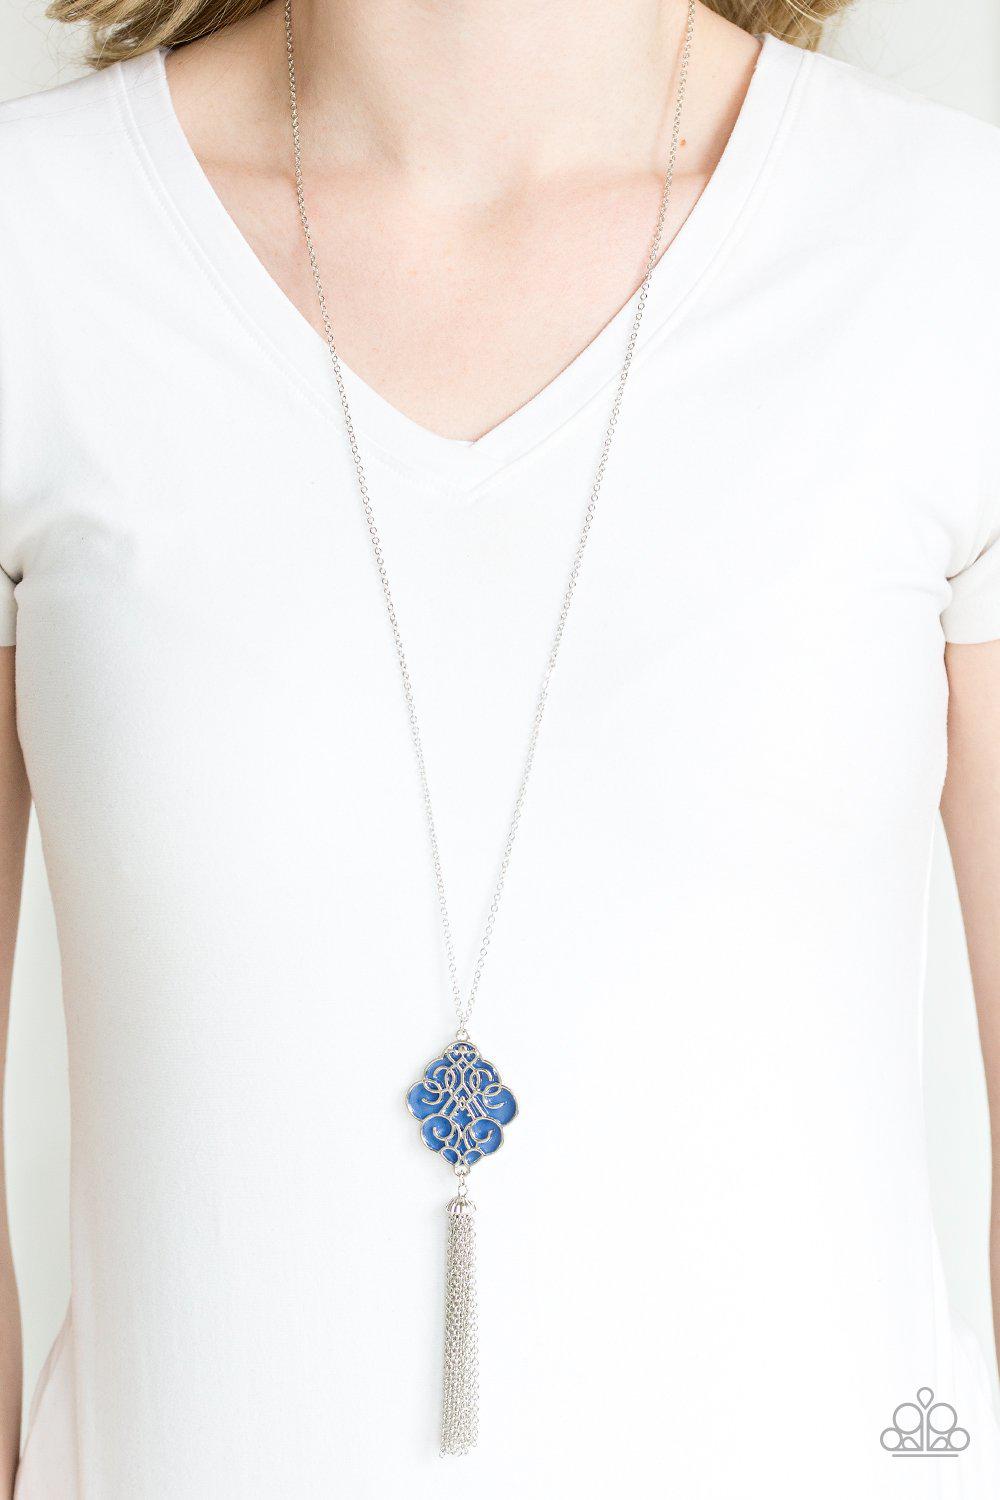 Malibu Mandala Blue Necklace - Paparazzi Accessories - model -CarasShop.com - $5 Jewelry by Cara Jewels